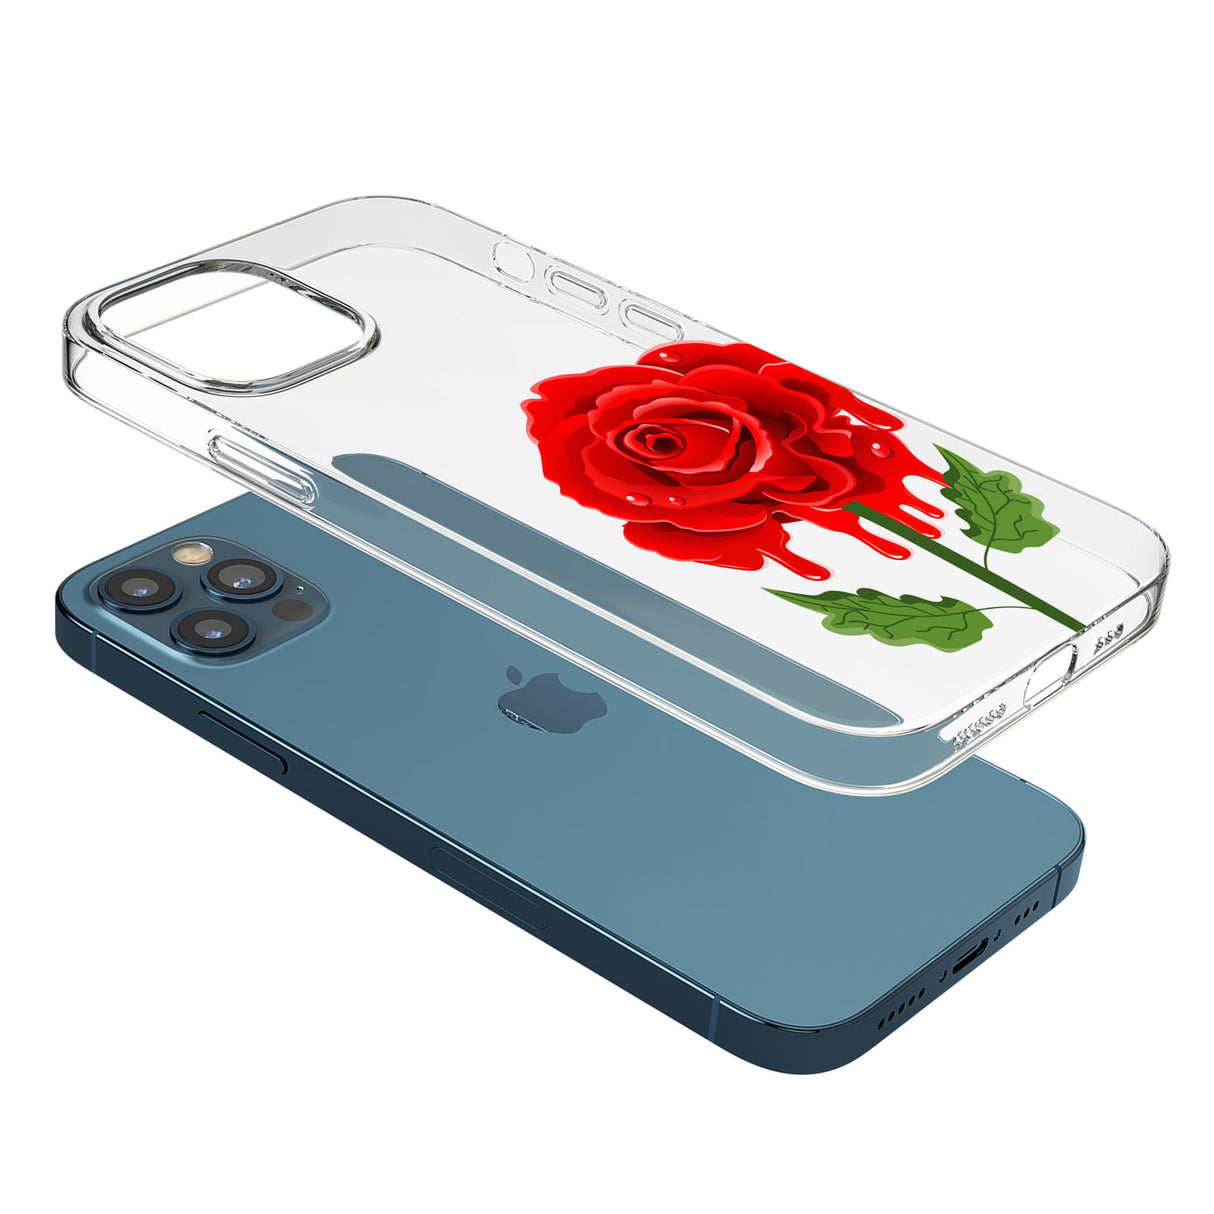 Melting Rose Phone Case for iPhone 12 Pro